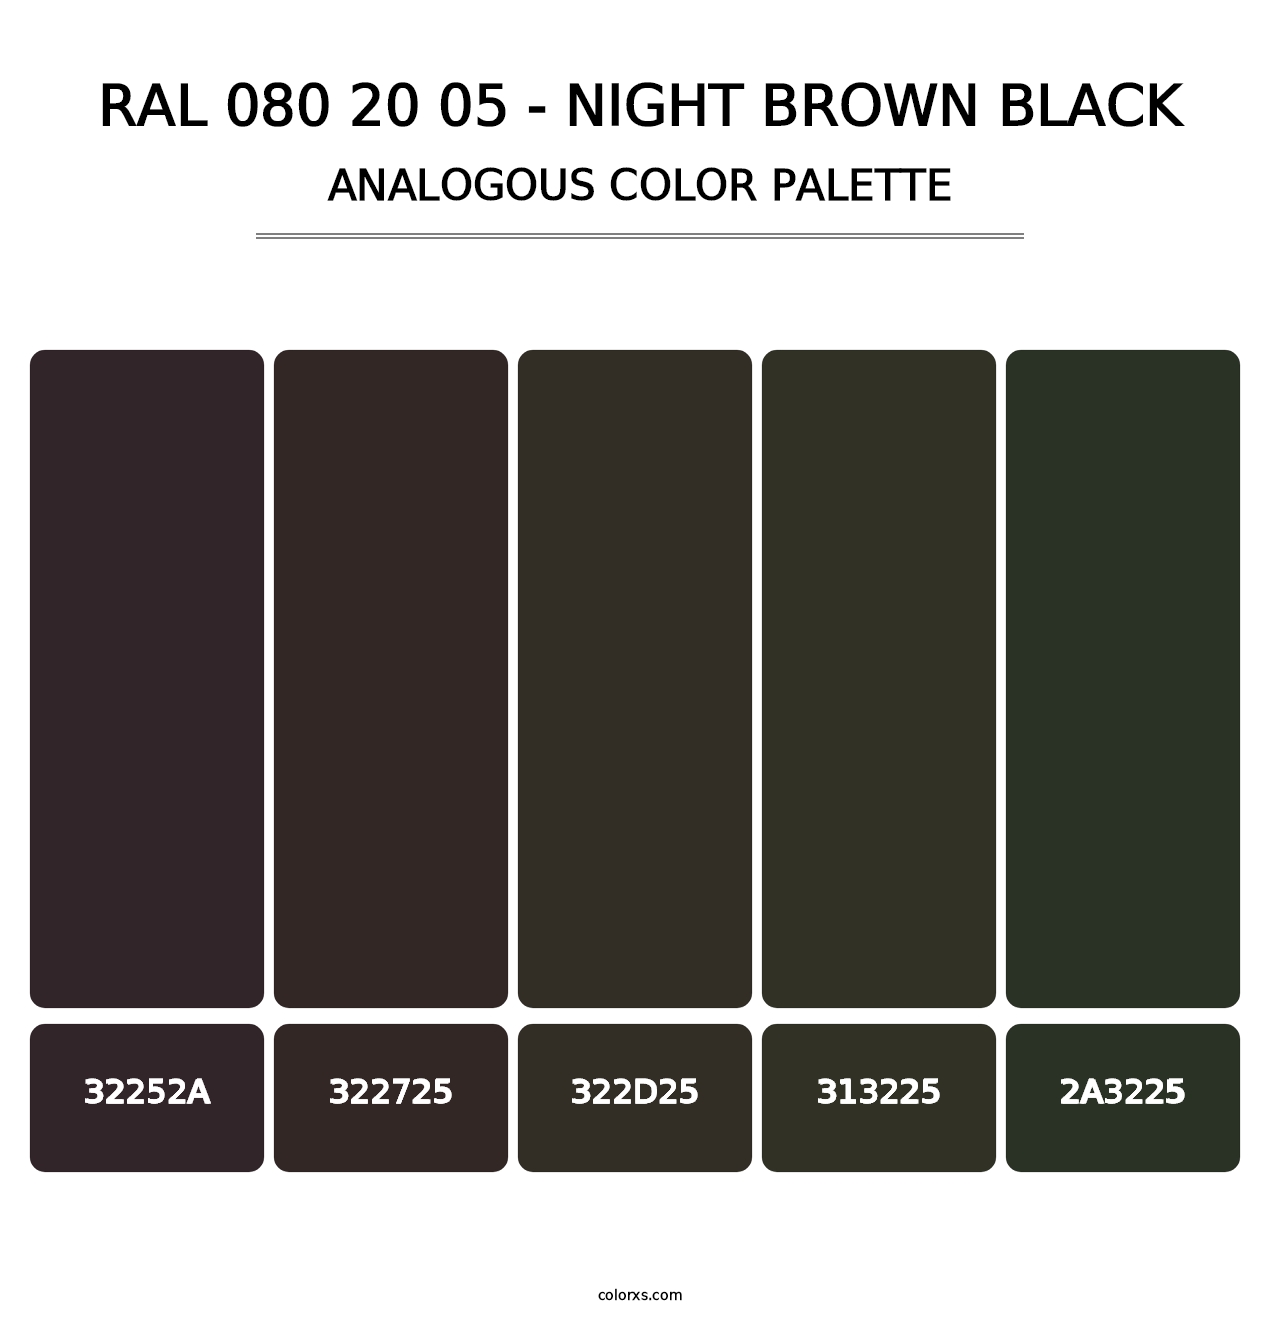 RAL 080 20 05 - Night Brown Black - Analogous Color Palette